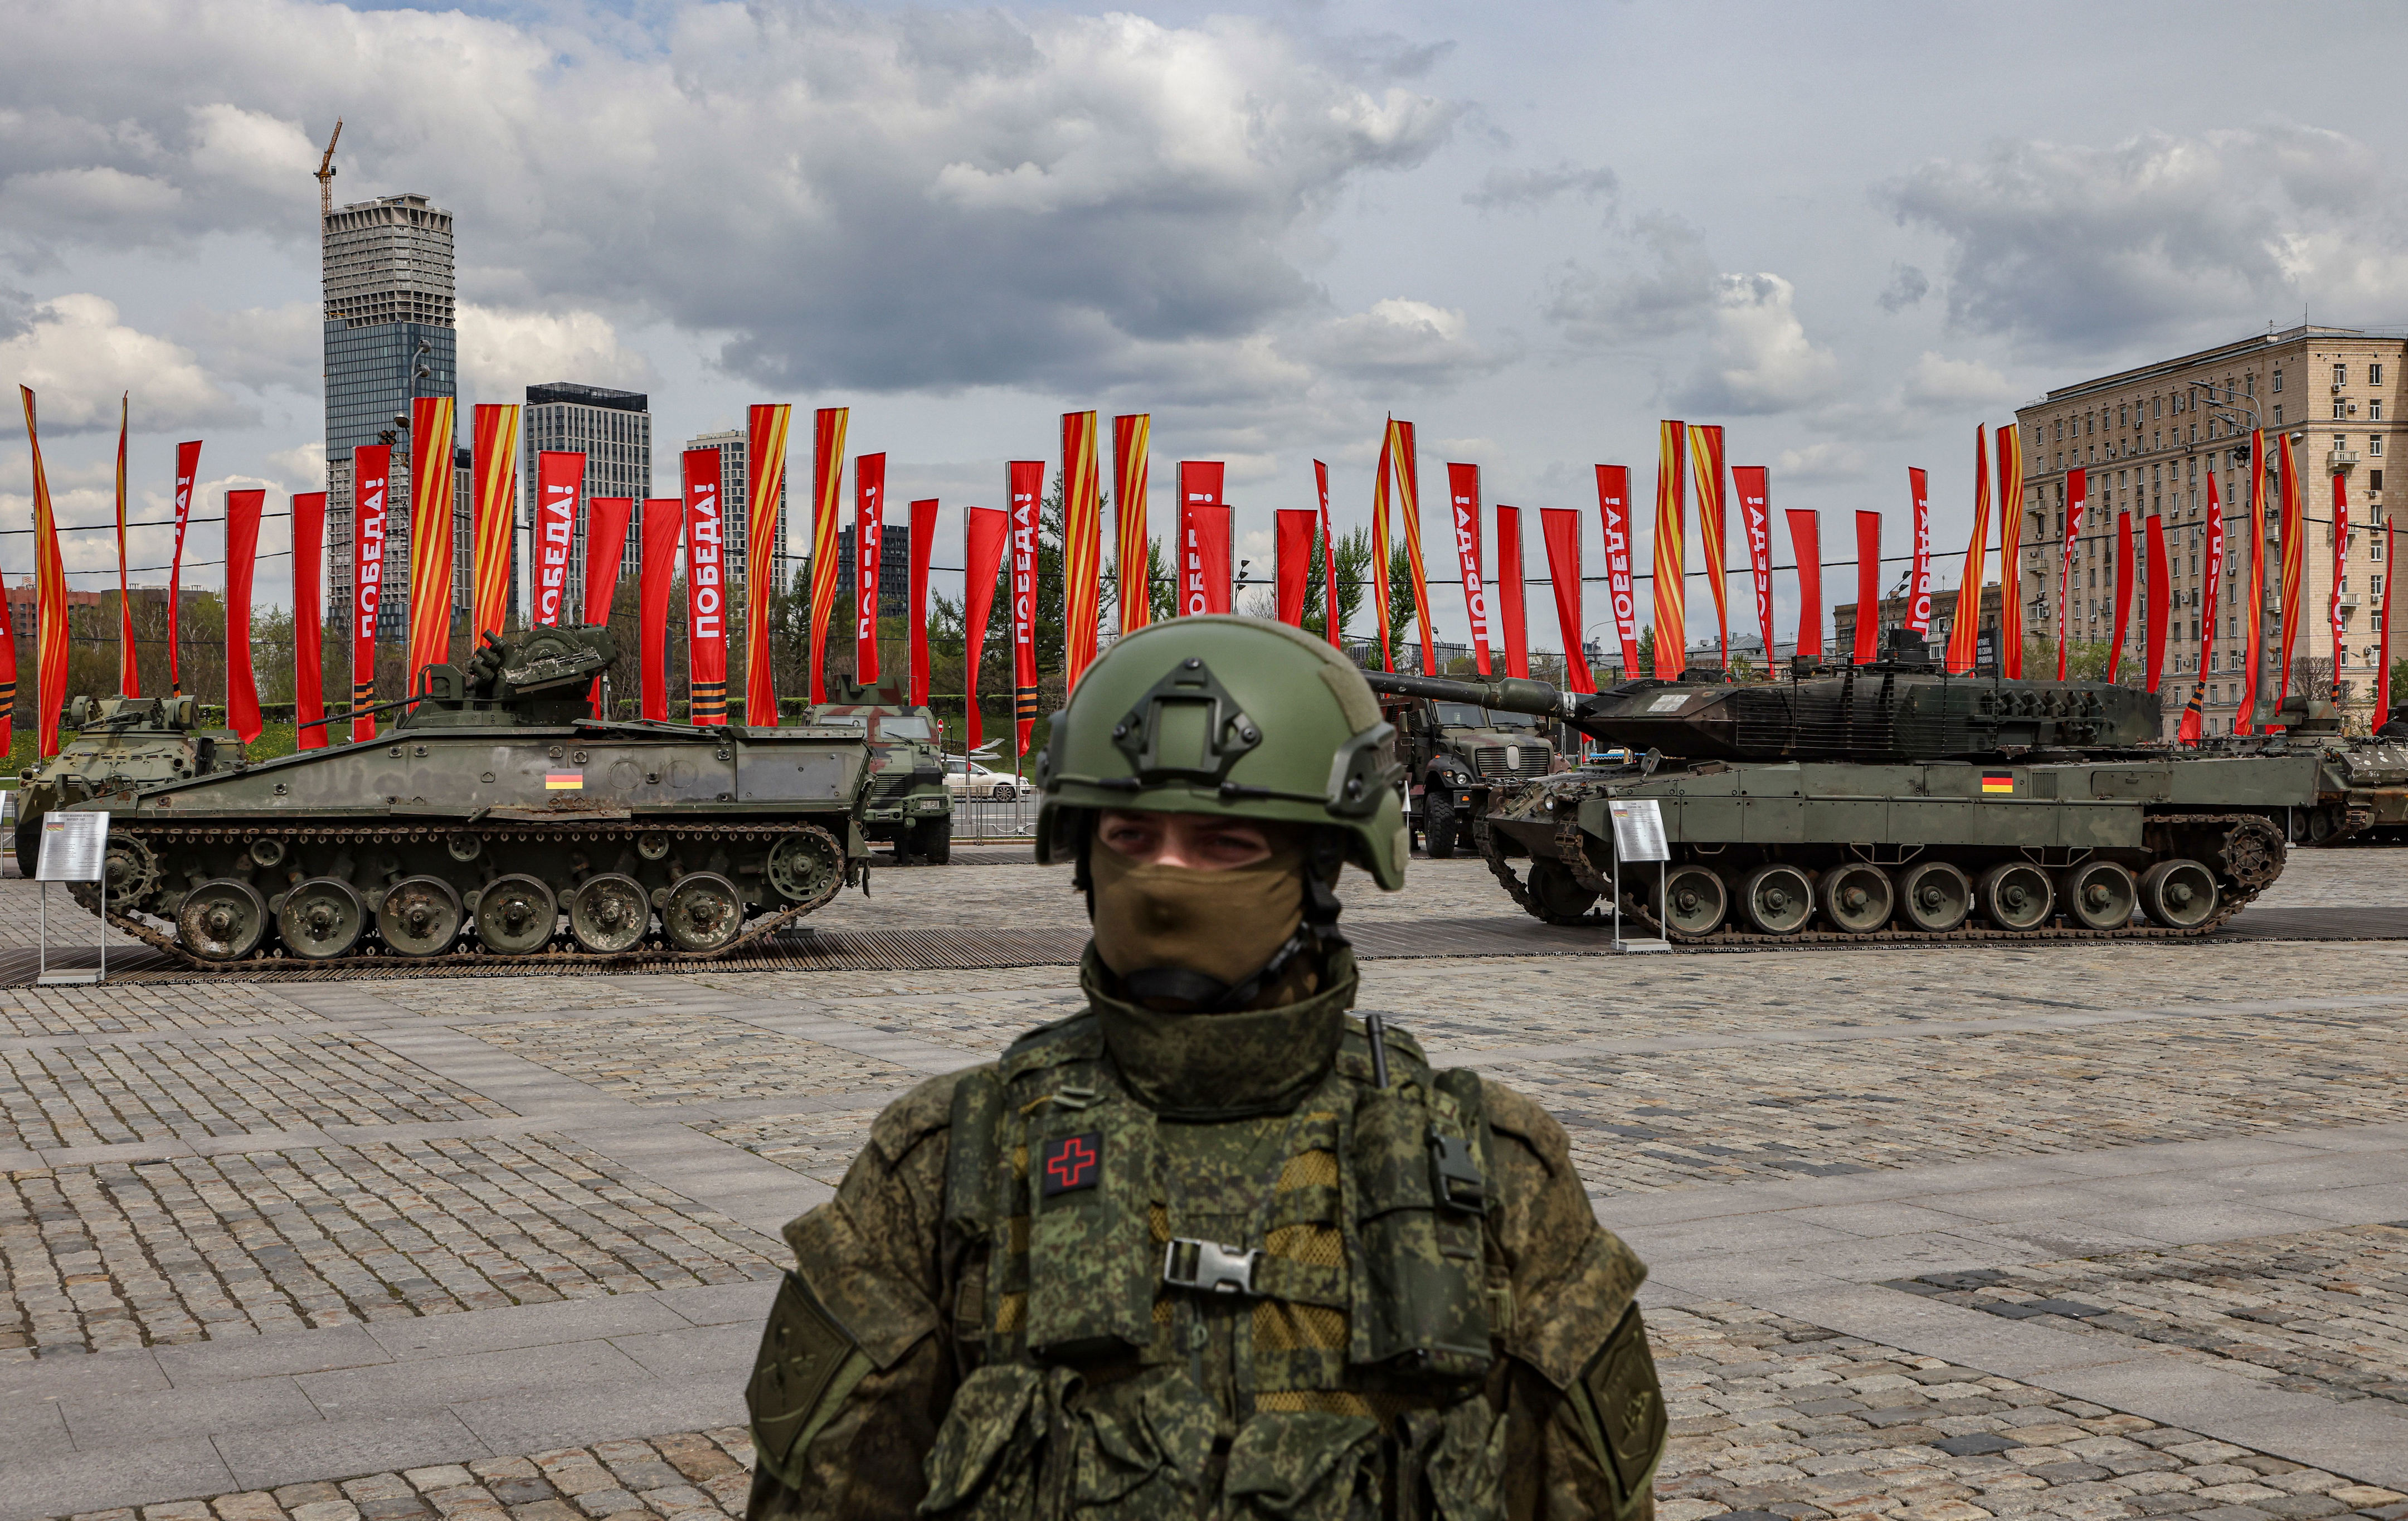 confident of victory over ukraine, russia exhibits western war trophies